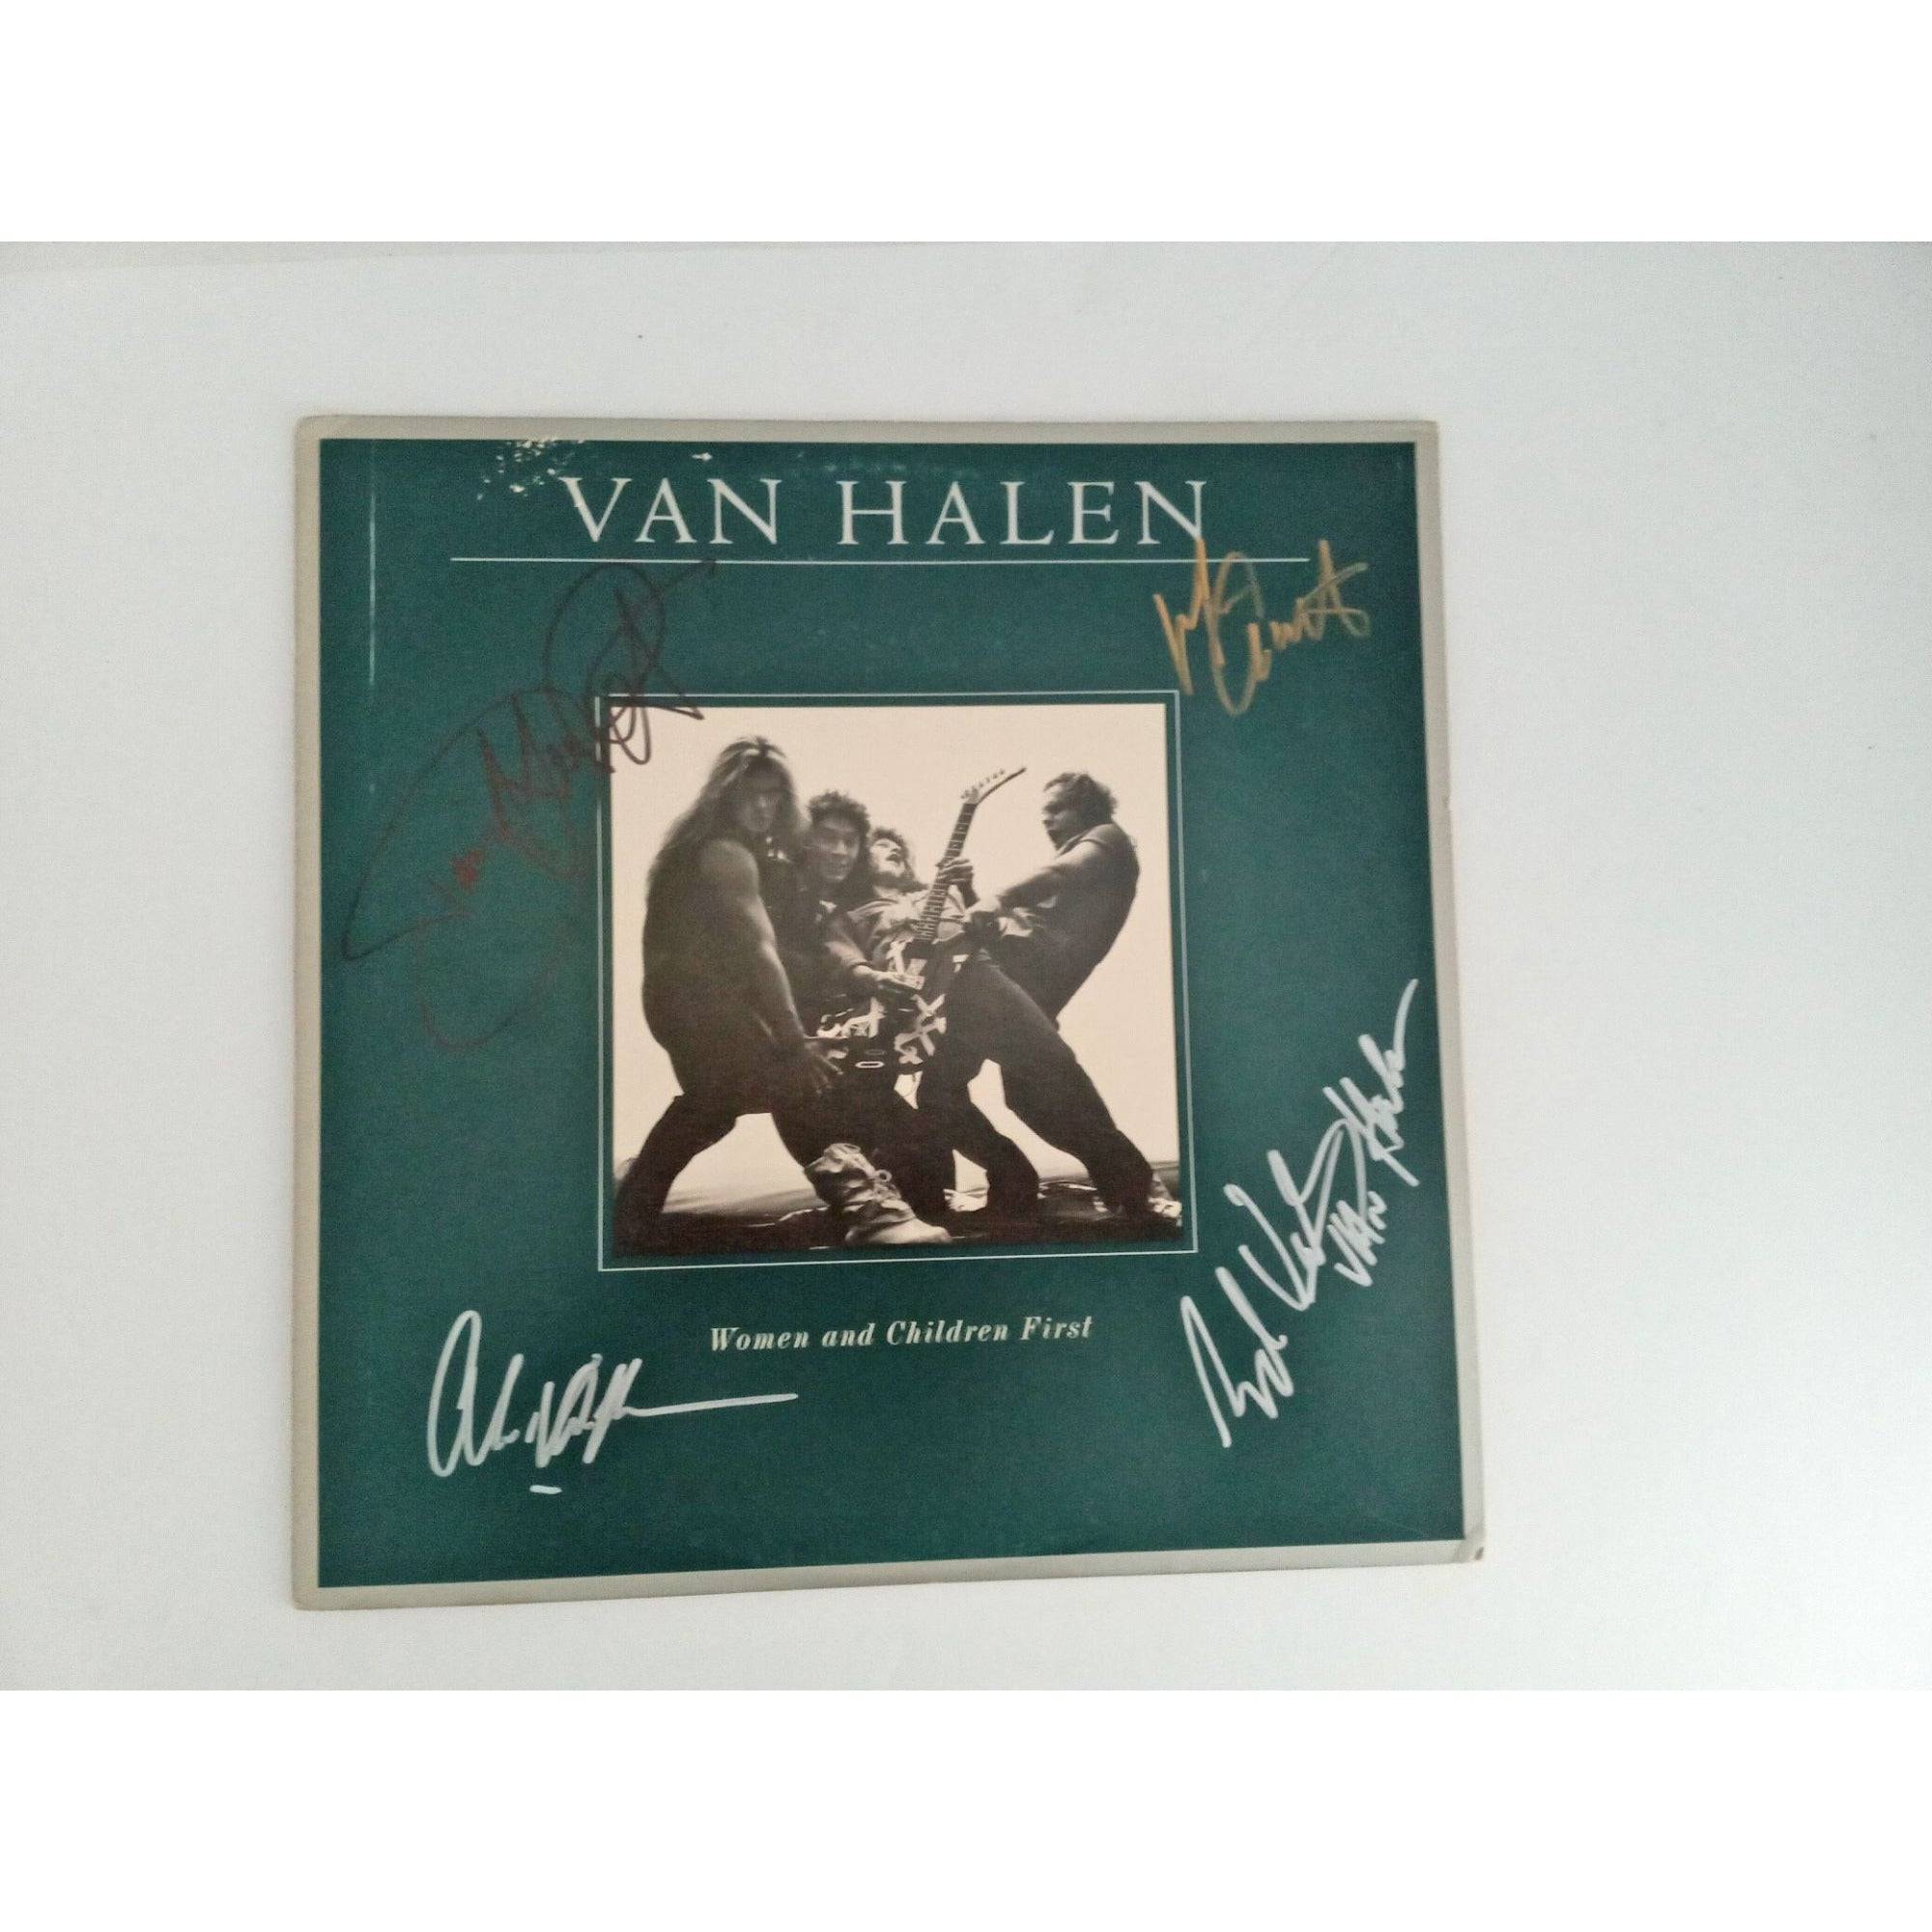 VAN HALEN - LP - Women and Children First